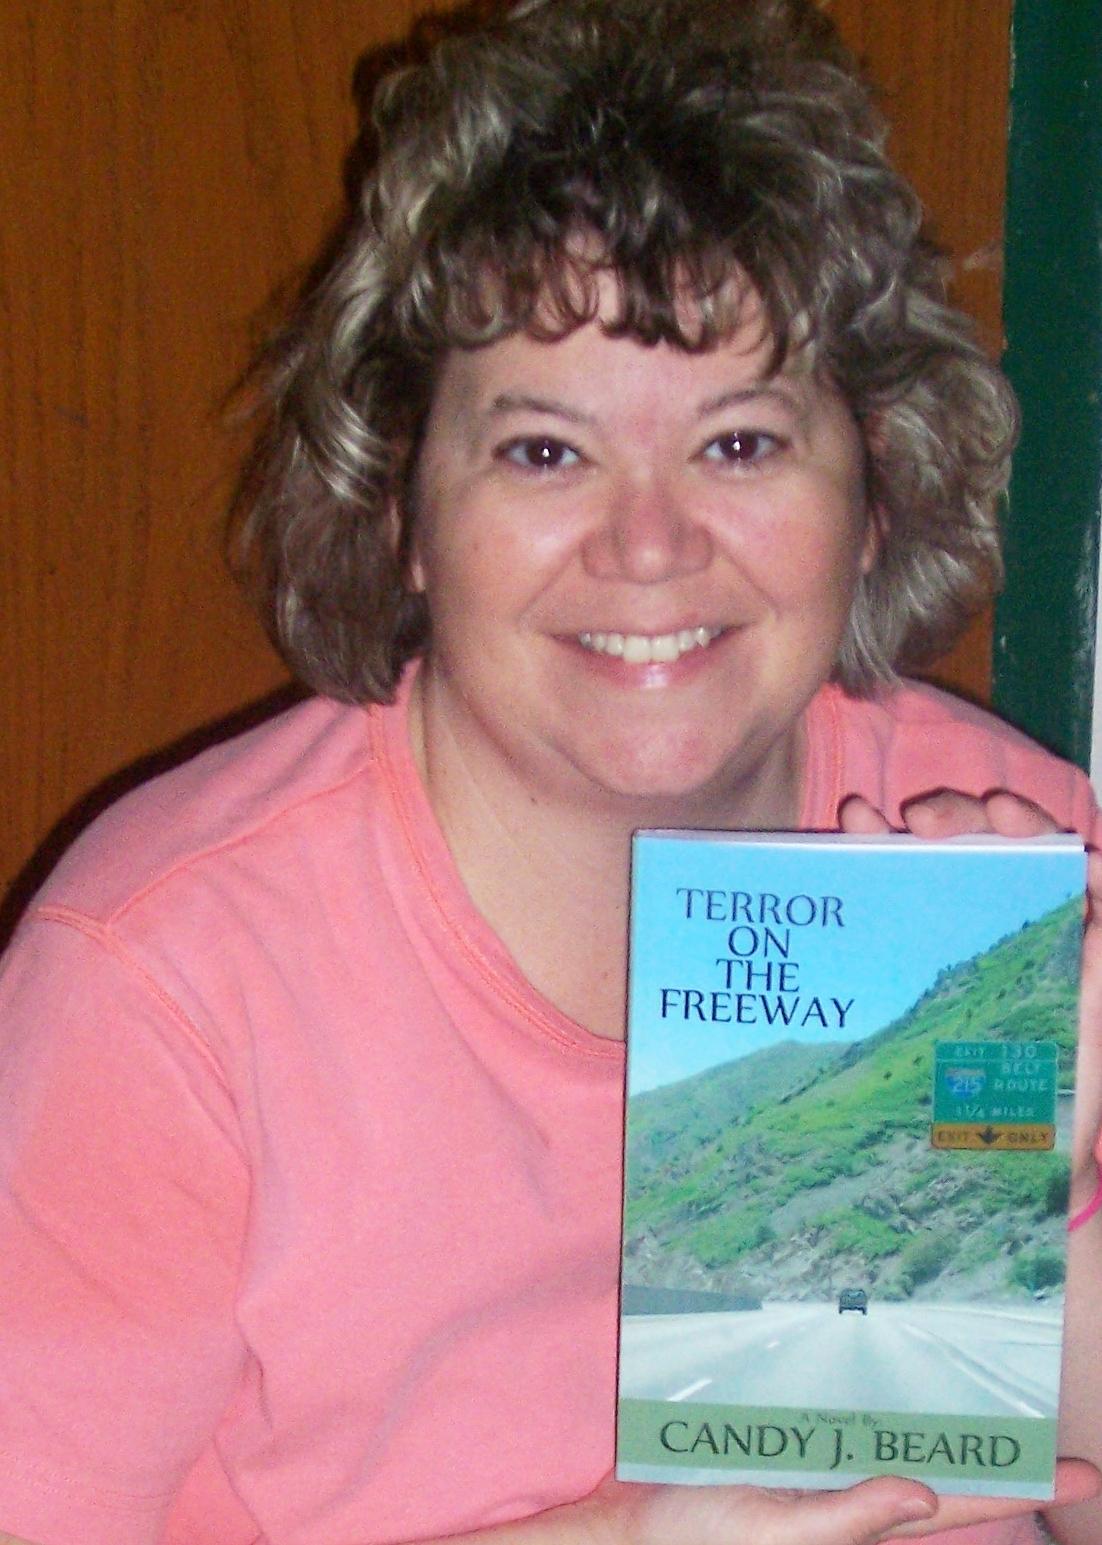 Candy J. Beard - proud author, 2009